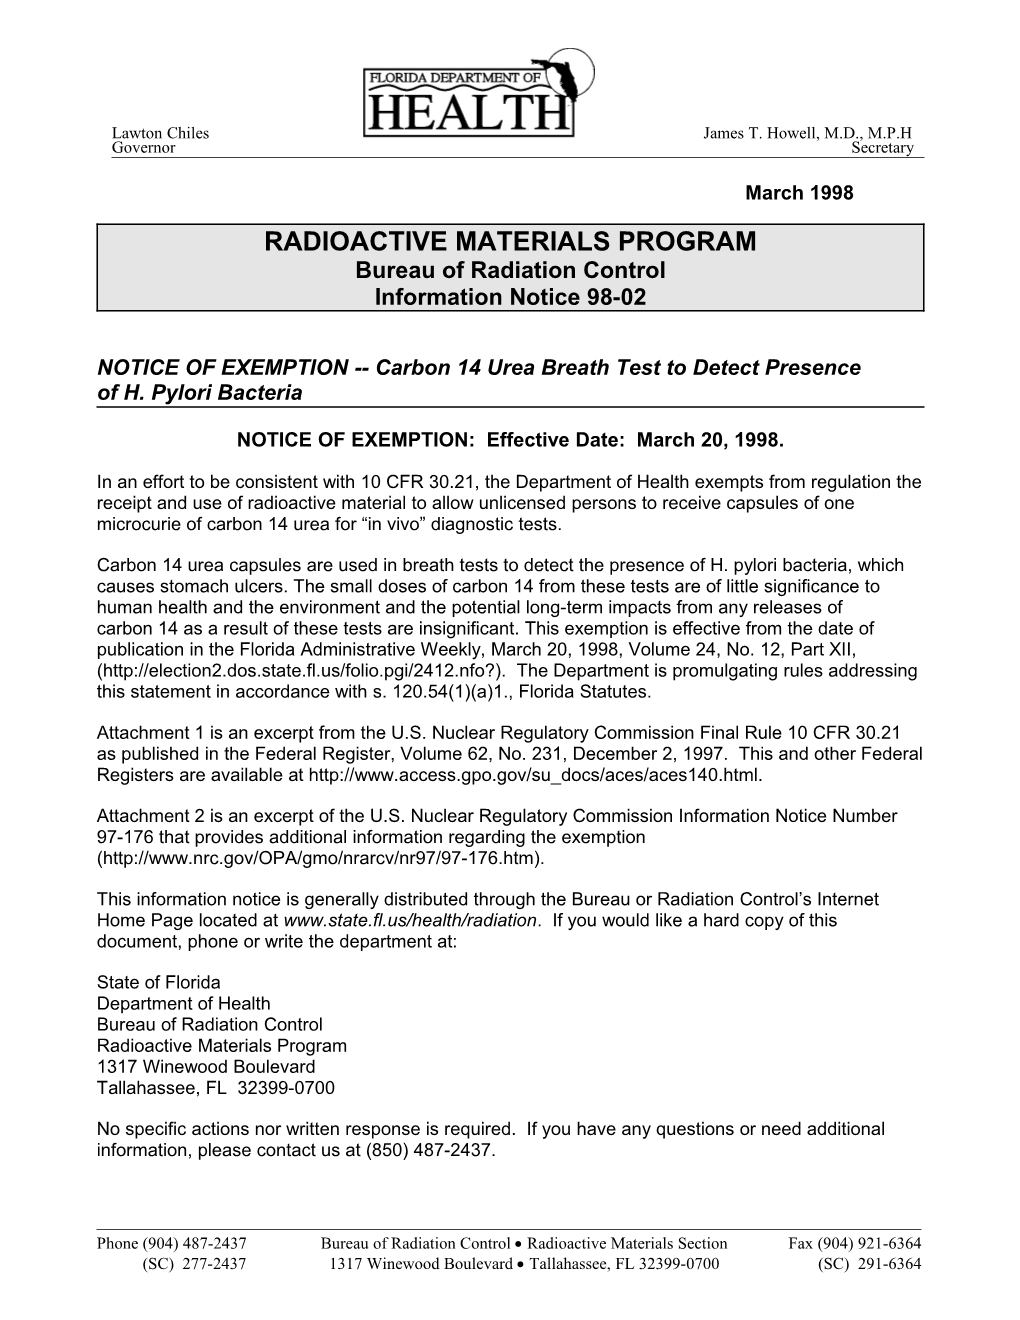 Radioactive Materials Program Bureau of Radiation Control Information Notice 98-02